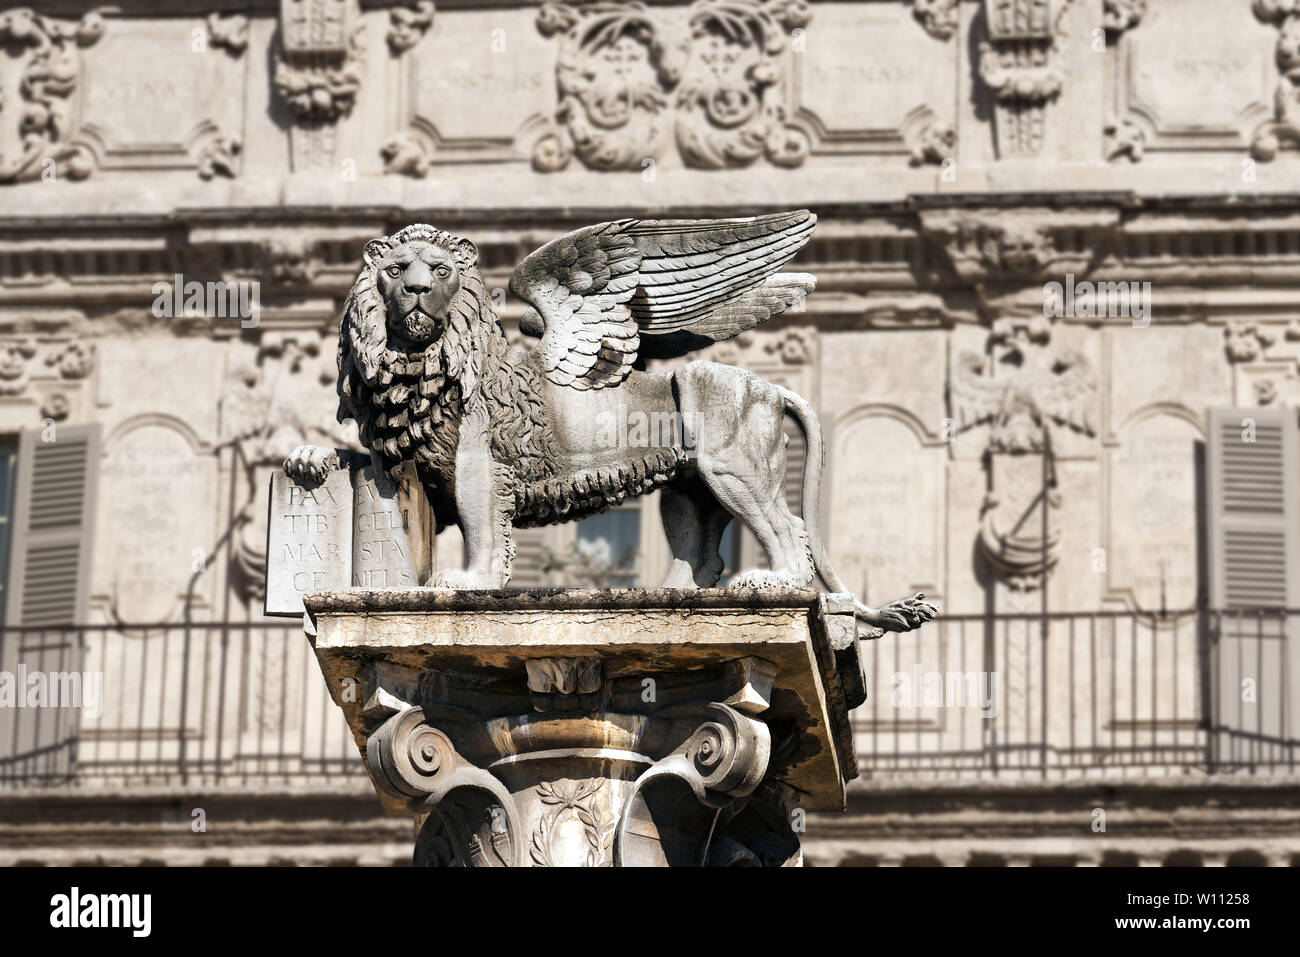 The winged lion of St Mark, symbol of the Venetian Republic, in Piazza delle Erbe, Verona (UNESCO world heritage site), Veneto, Italy Stock Photo